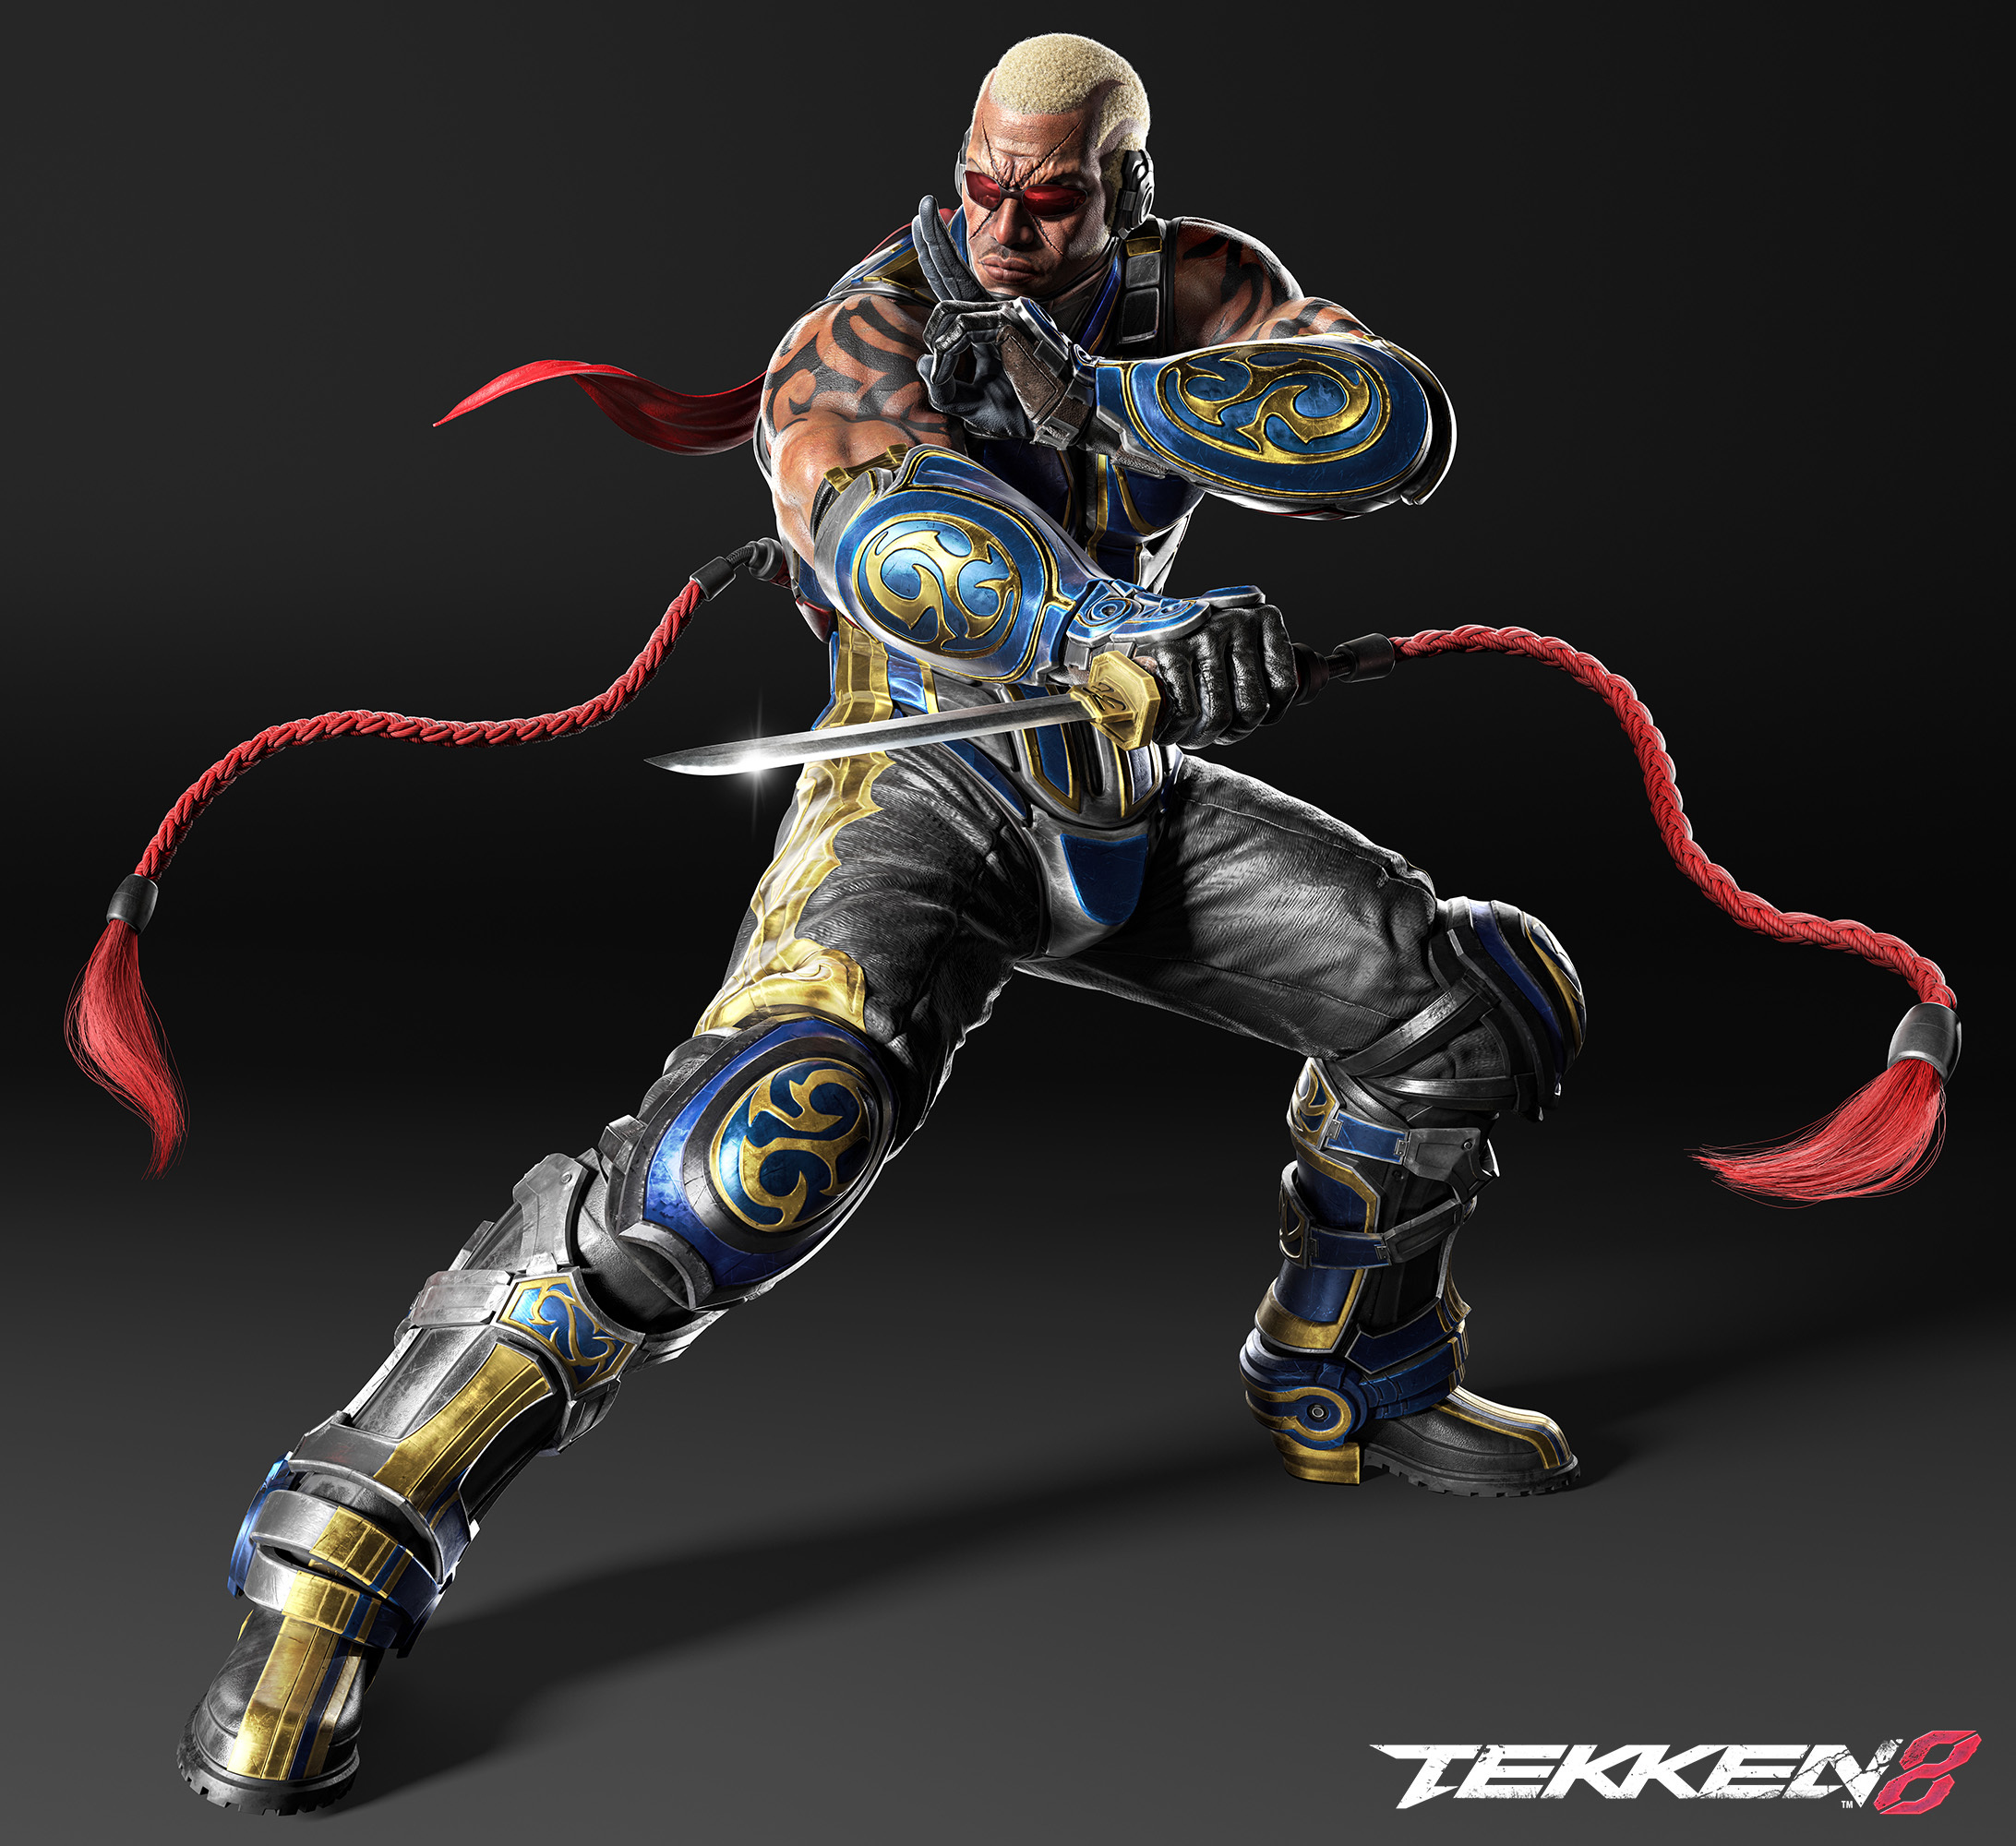 Tekken 8 CNT All Characters Key Moves Revealed